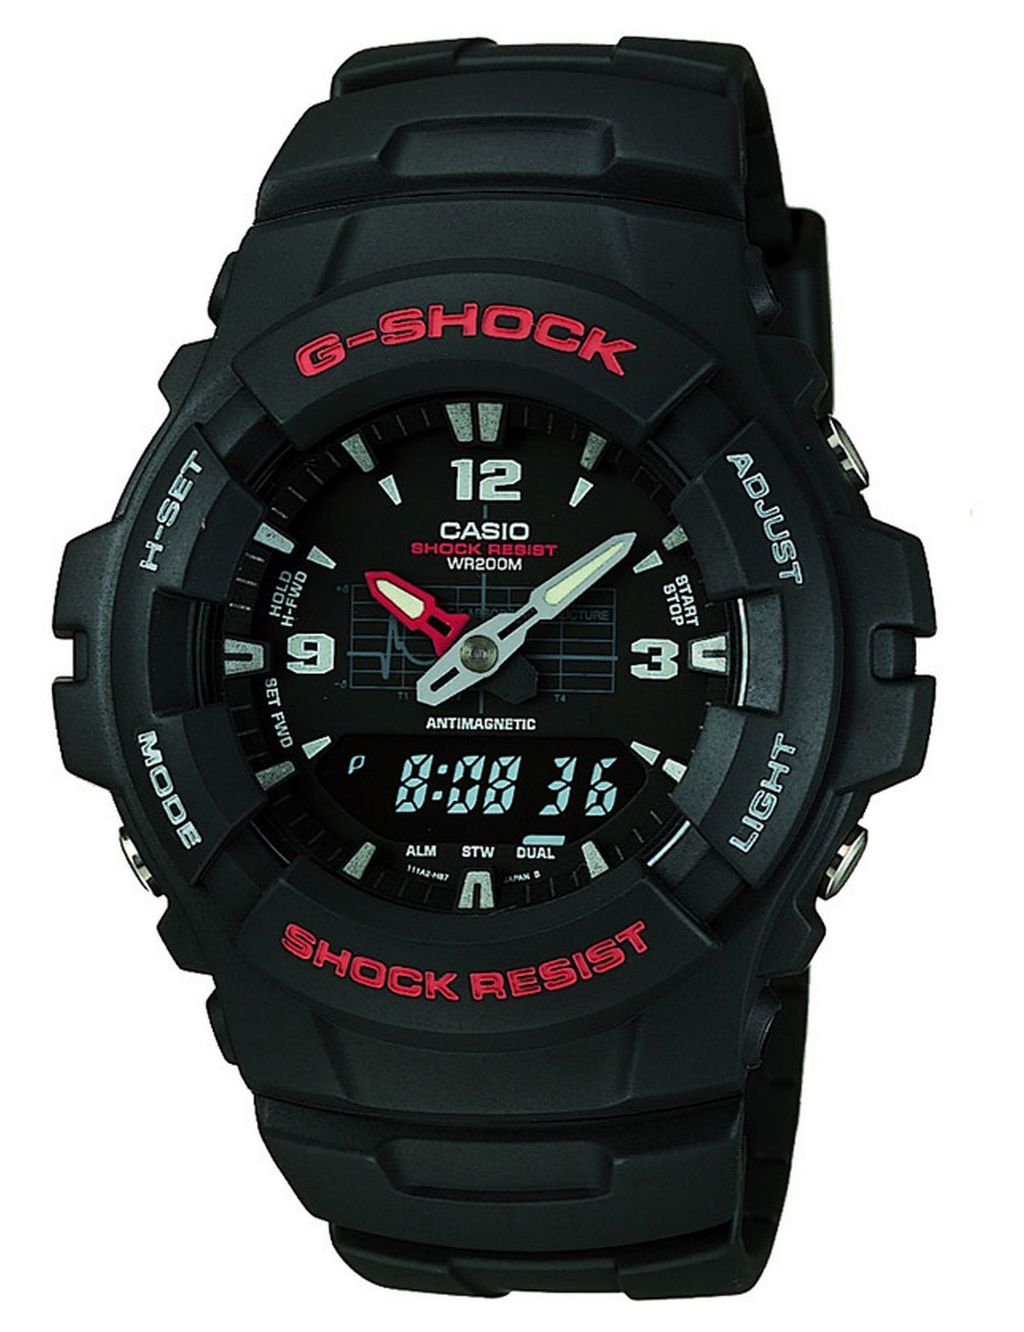 Casio G-Shock Alarm Chronograph Black Watch